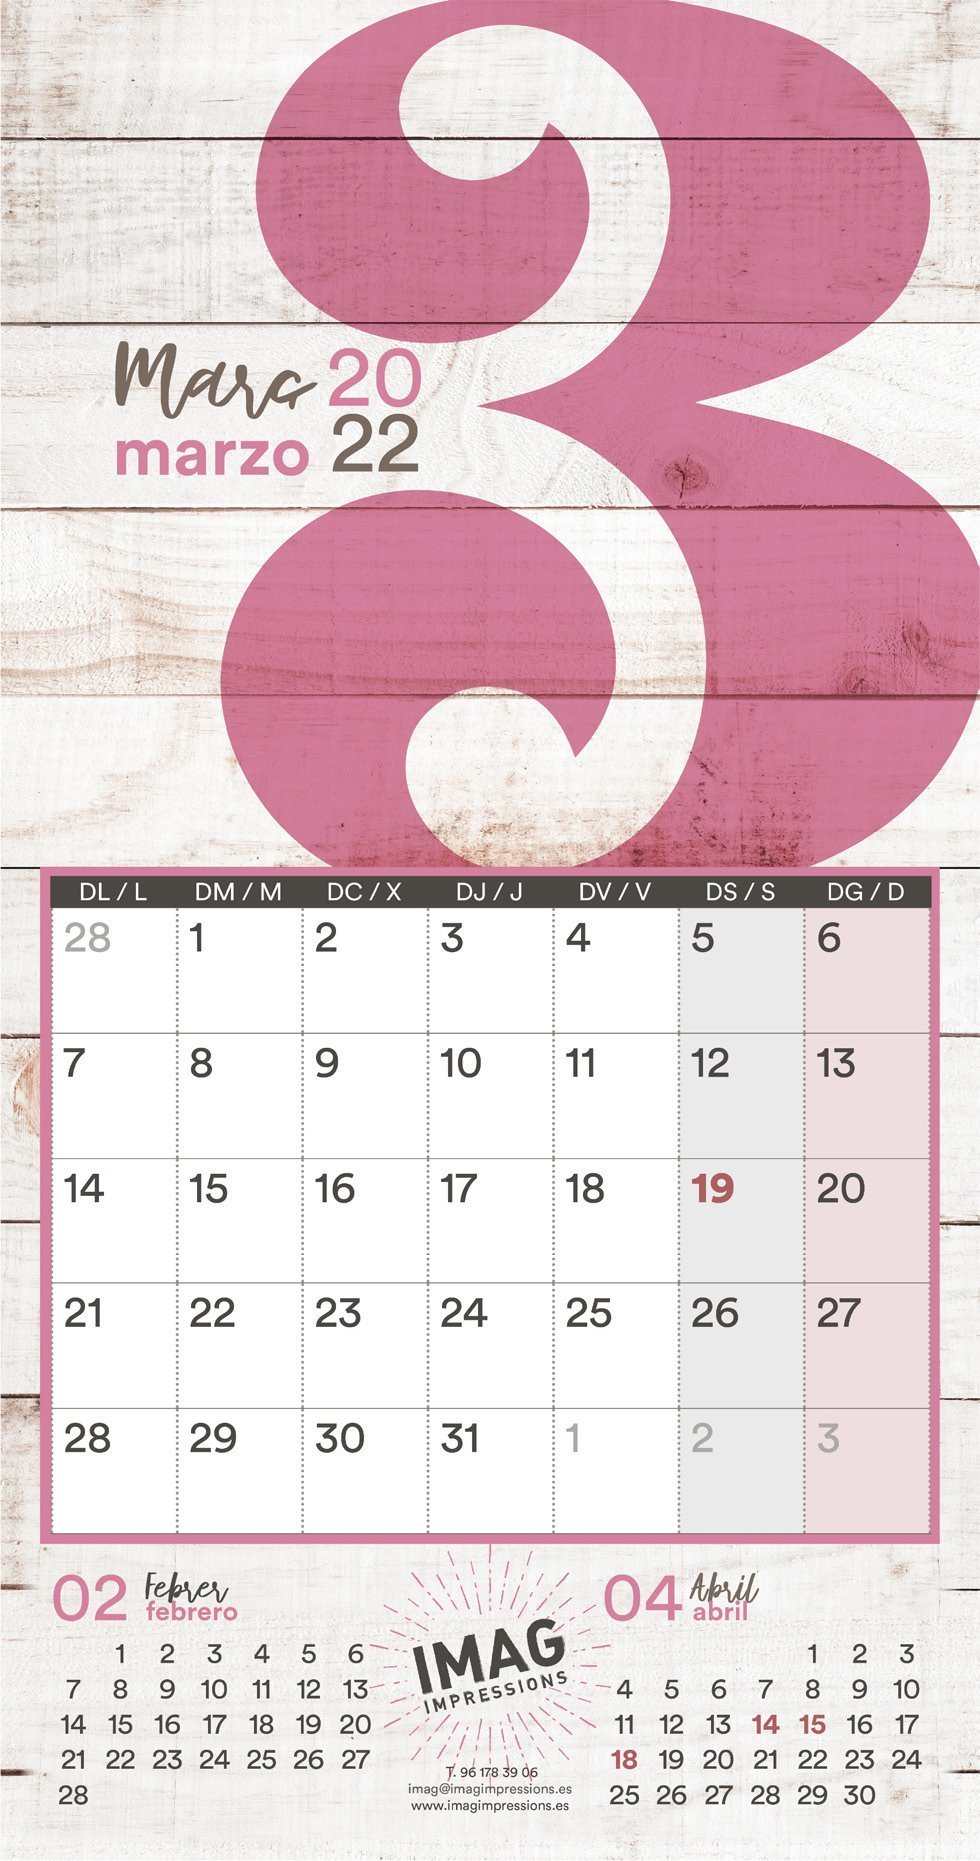 Calendari Imag Impressions_ 2022 març